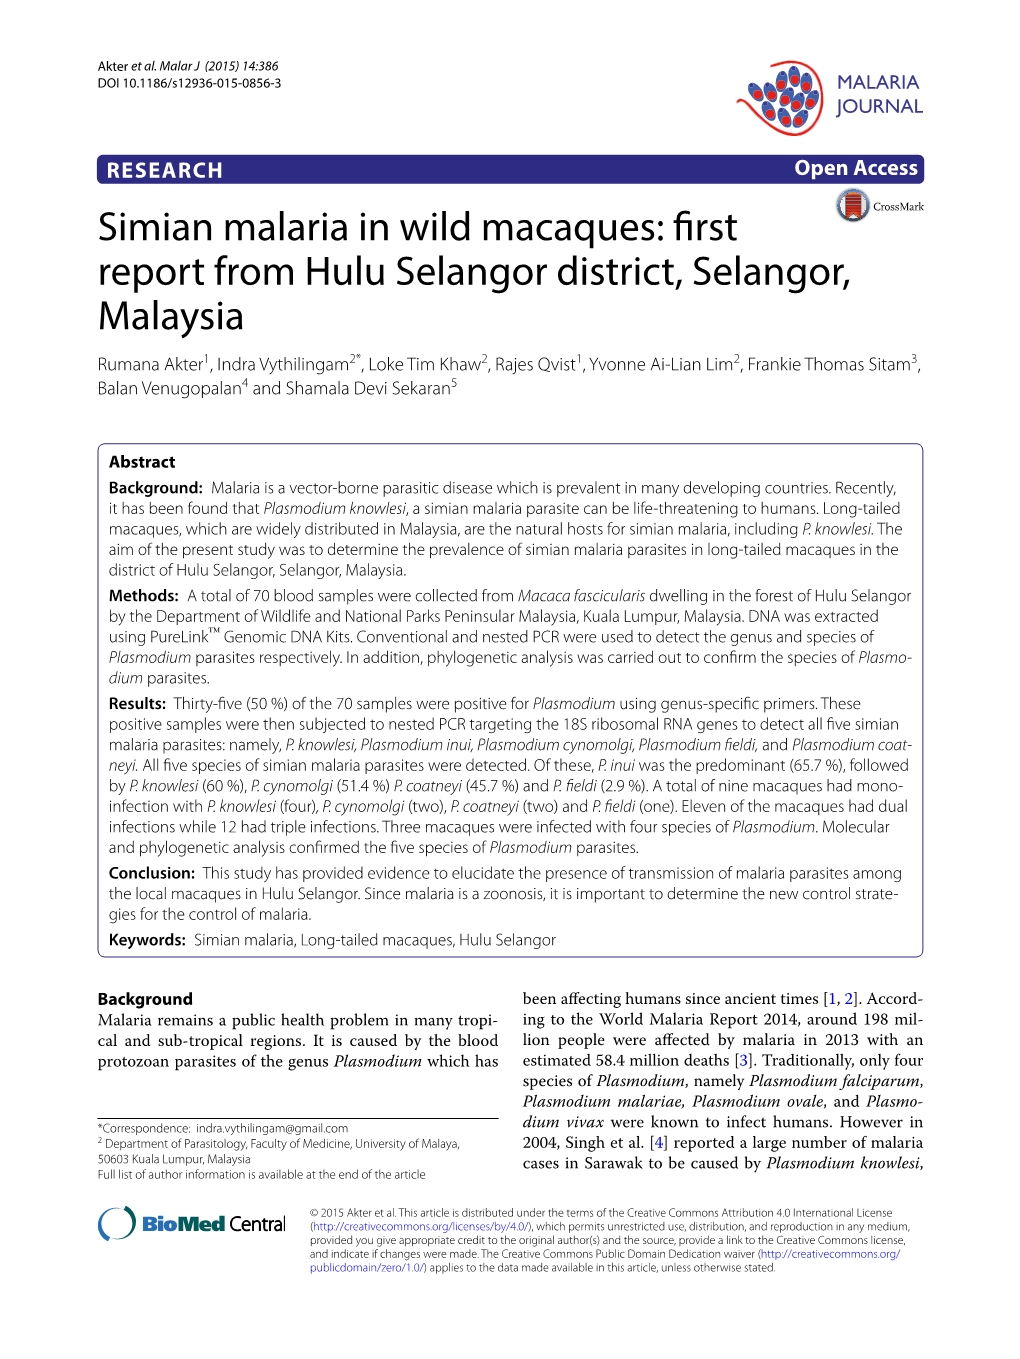 Simian Malaria in Wild Macaques